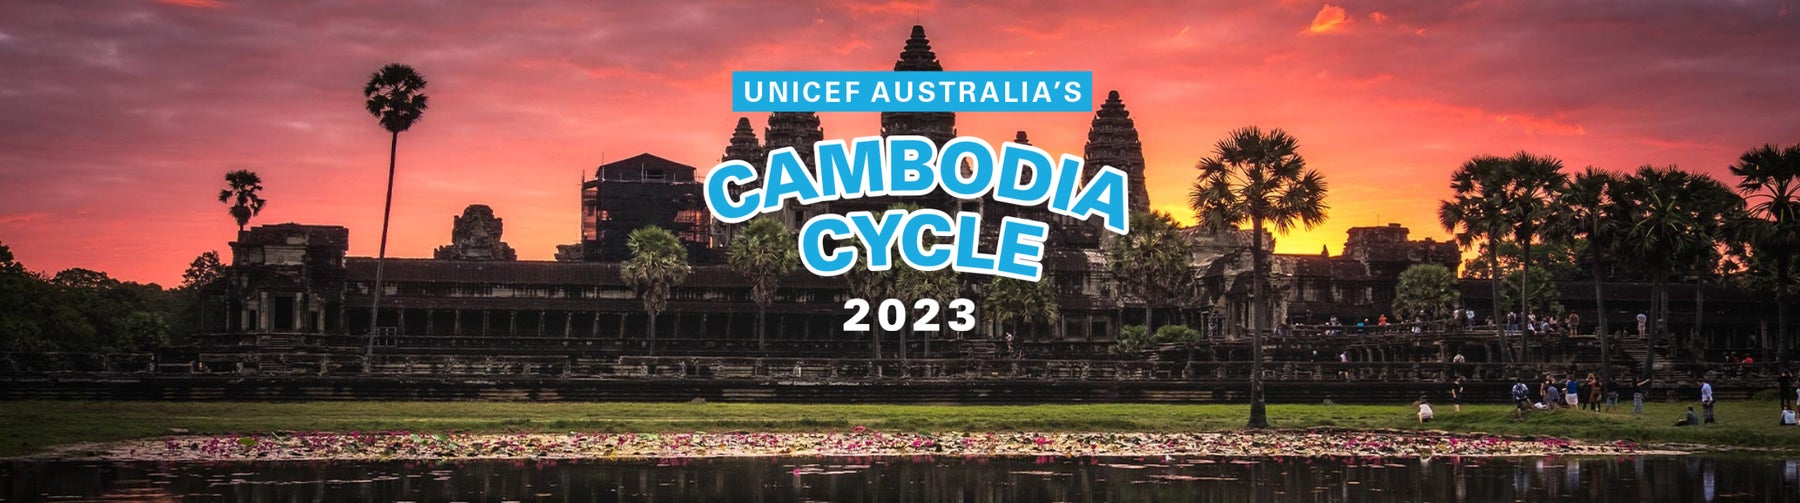 Cambodia cycle